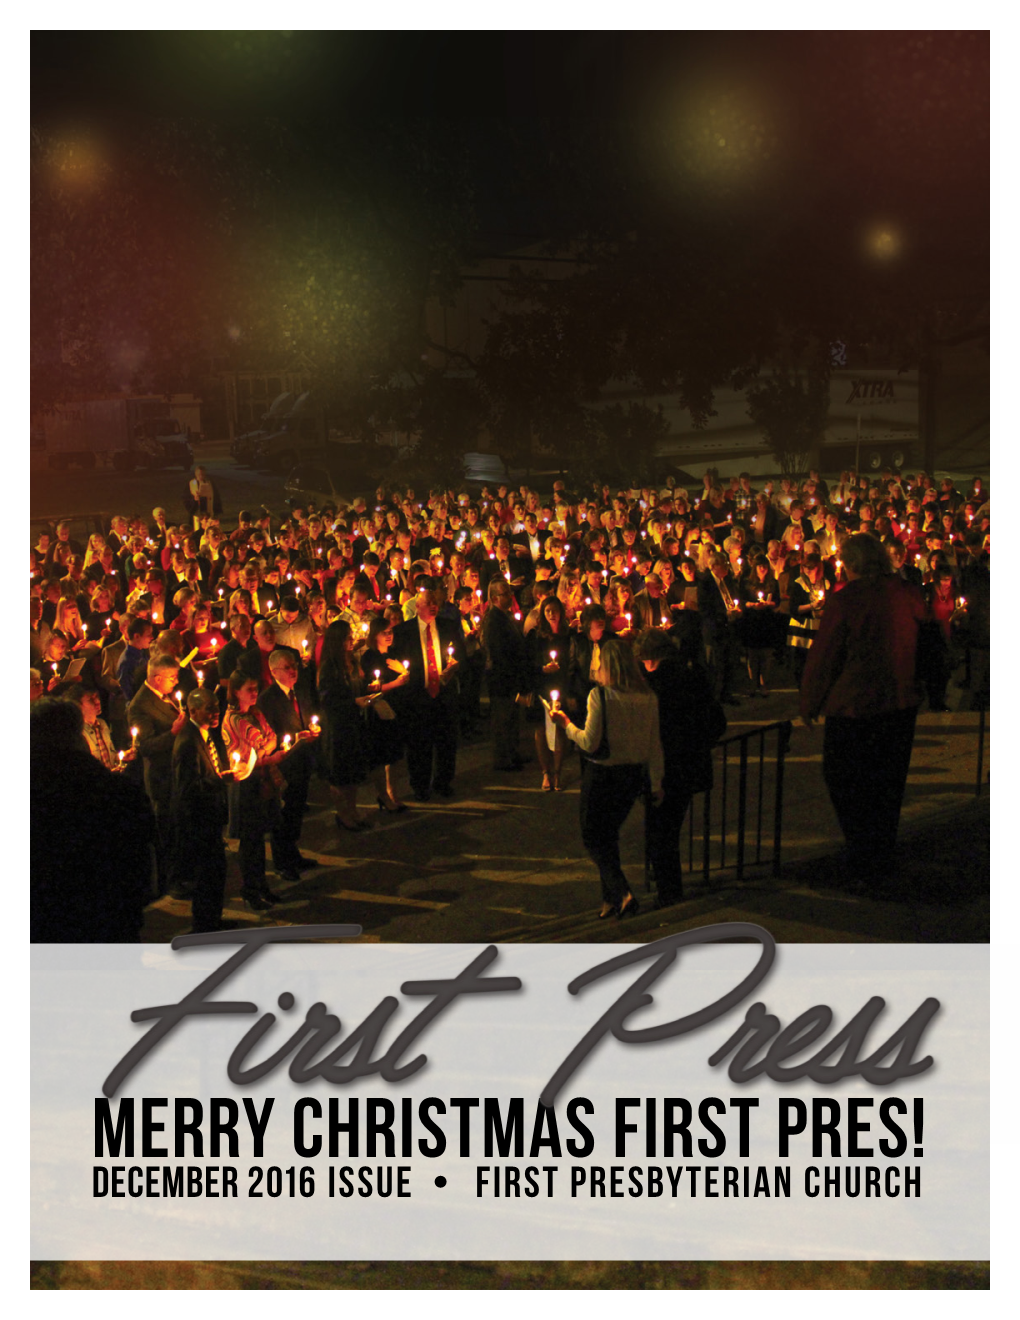 Merry Christmas First Pres! December 2016 Issue • First Presbyterian Church